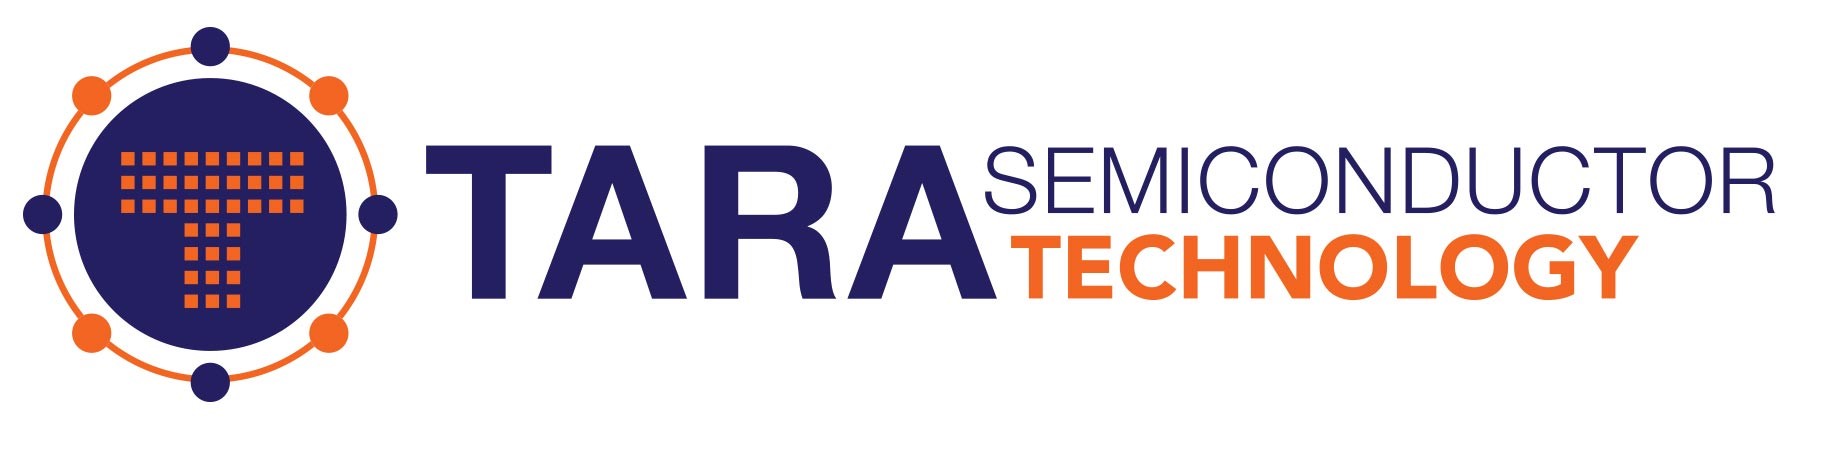 Tara Semiconductor Technology Irl Ltd